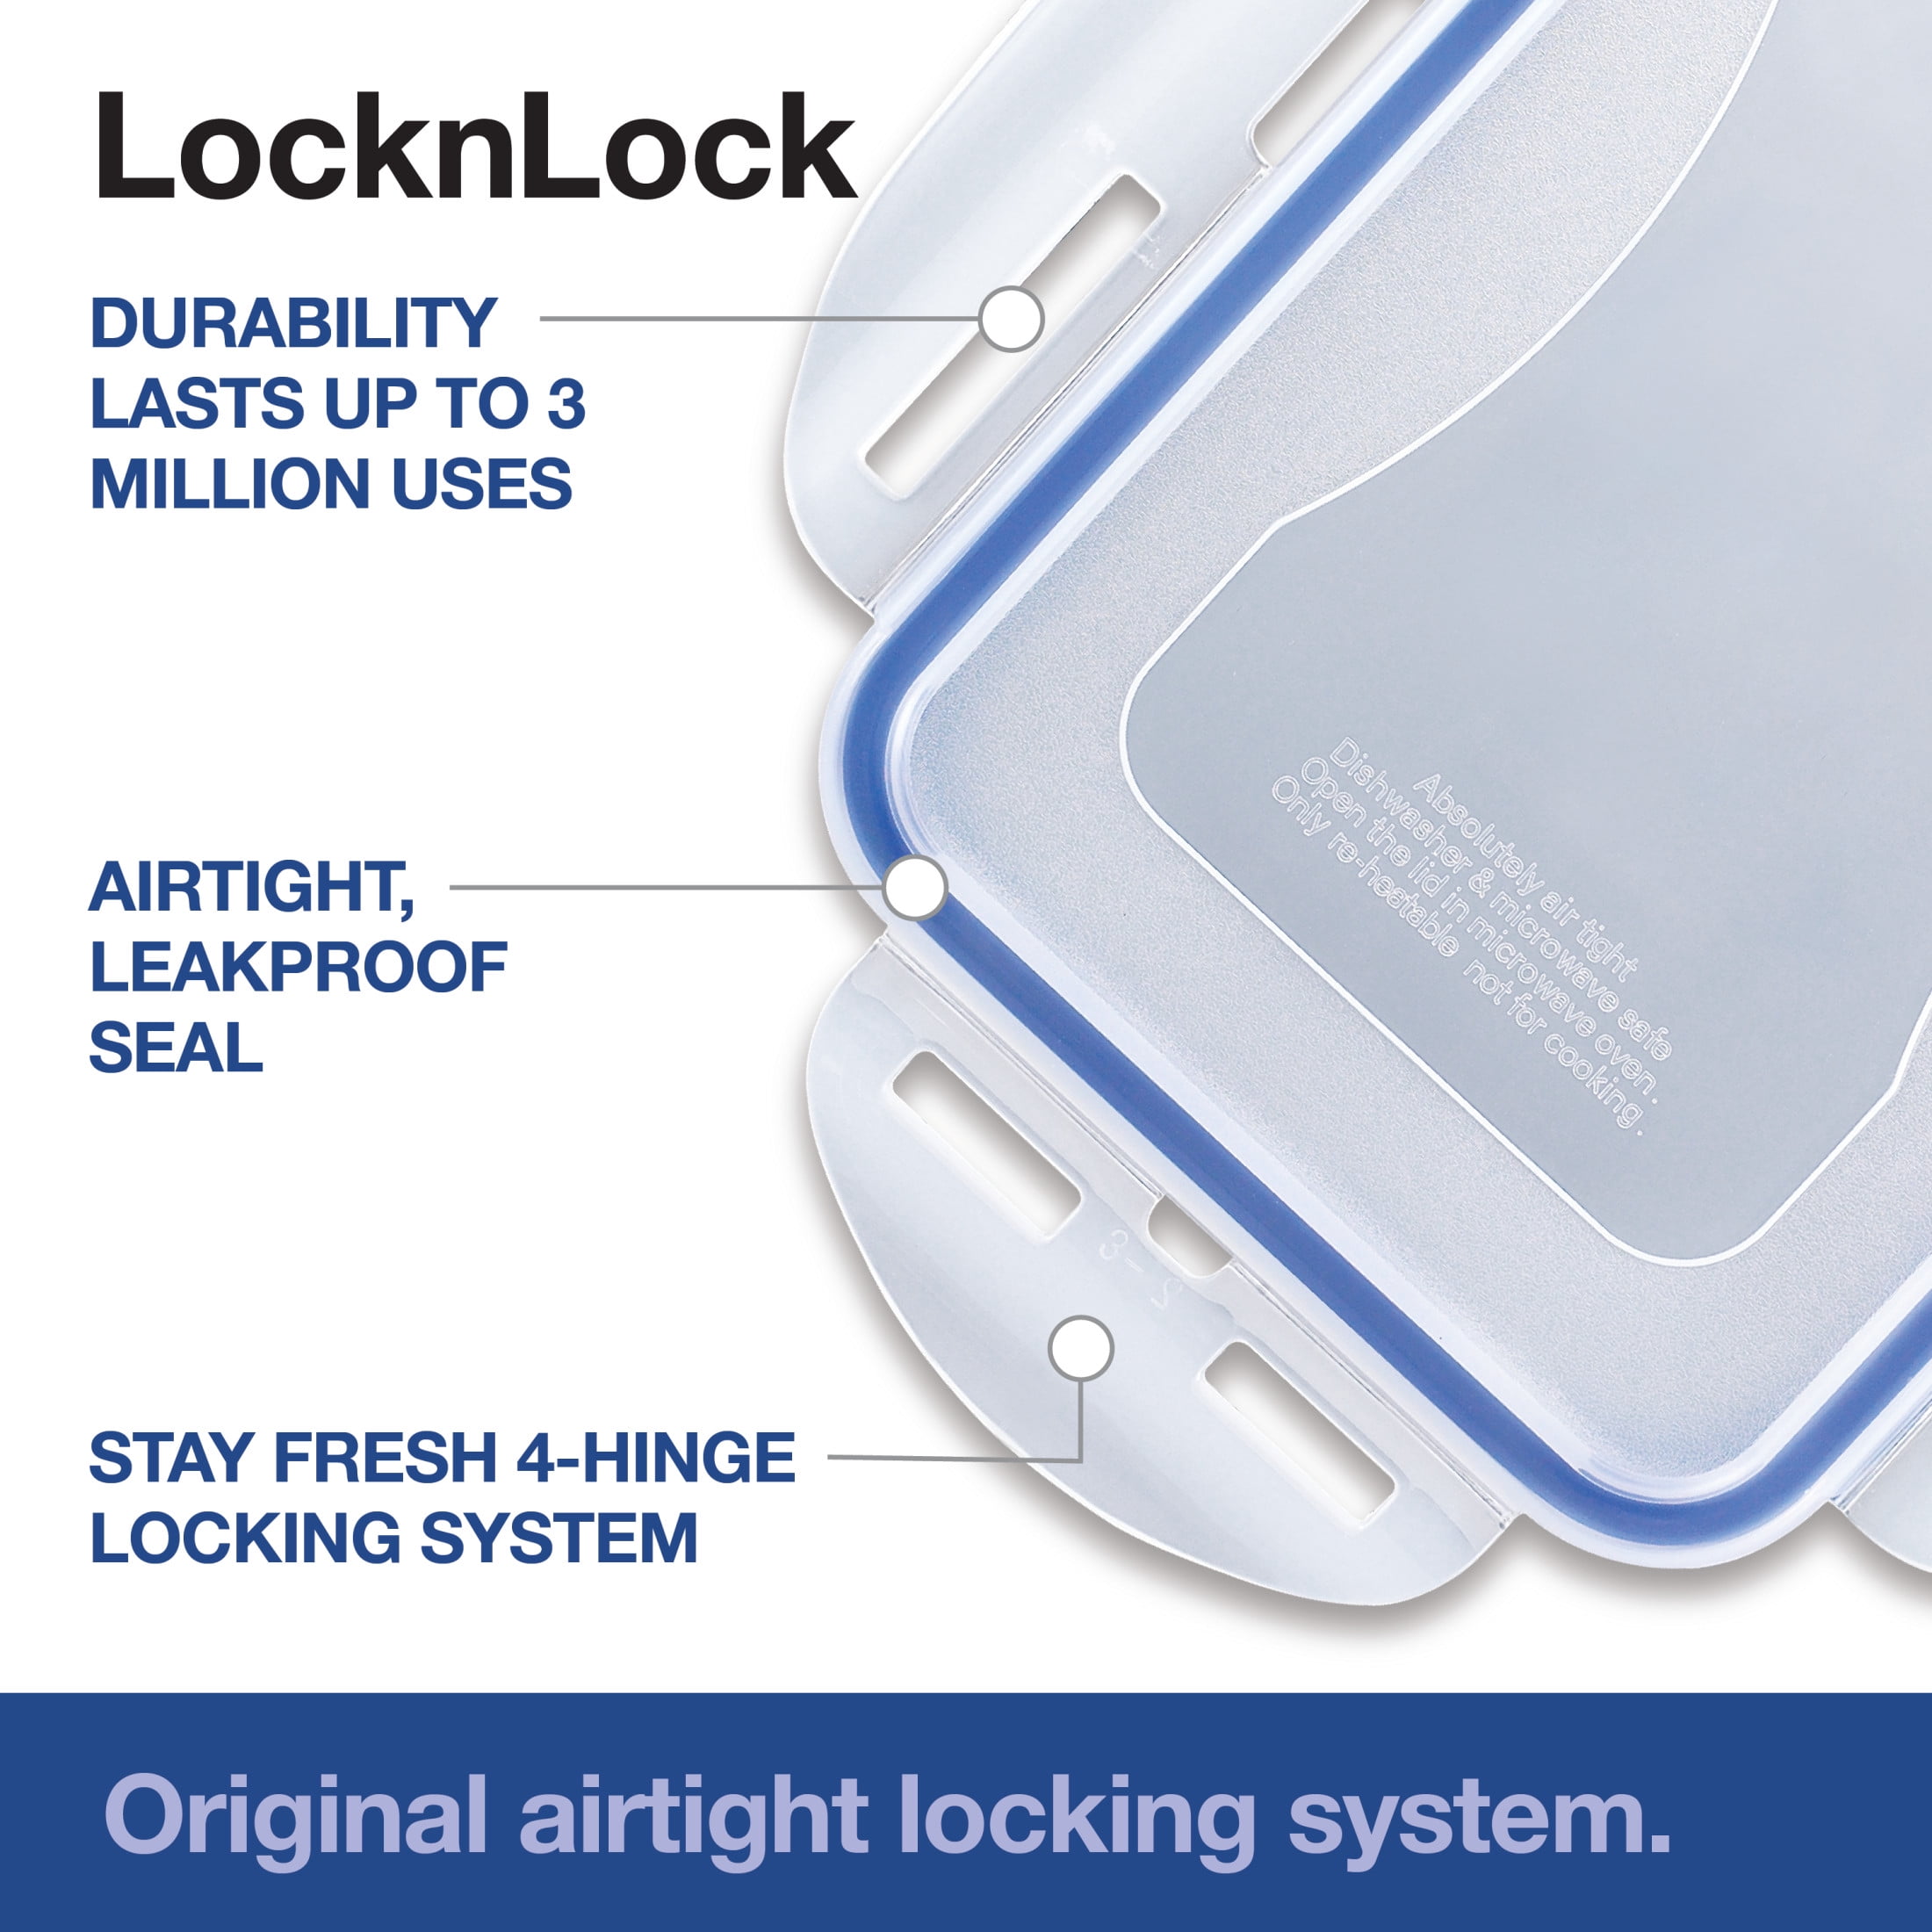 Fingerhut - Lock & Lock Easy Essentials Pantry 21.1-Cup Bread Box